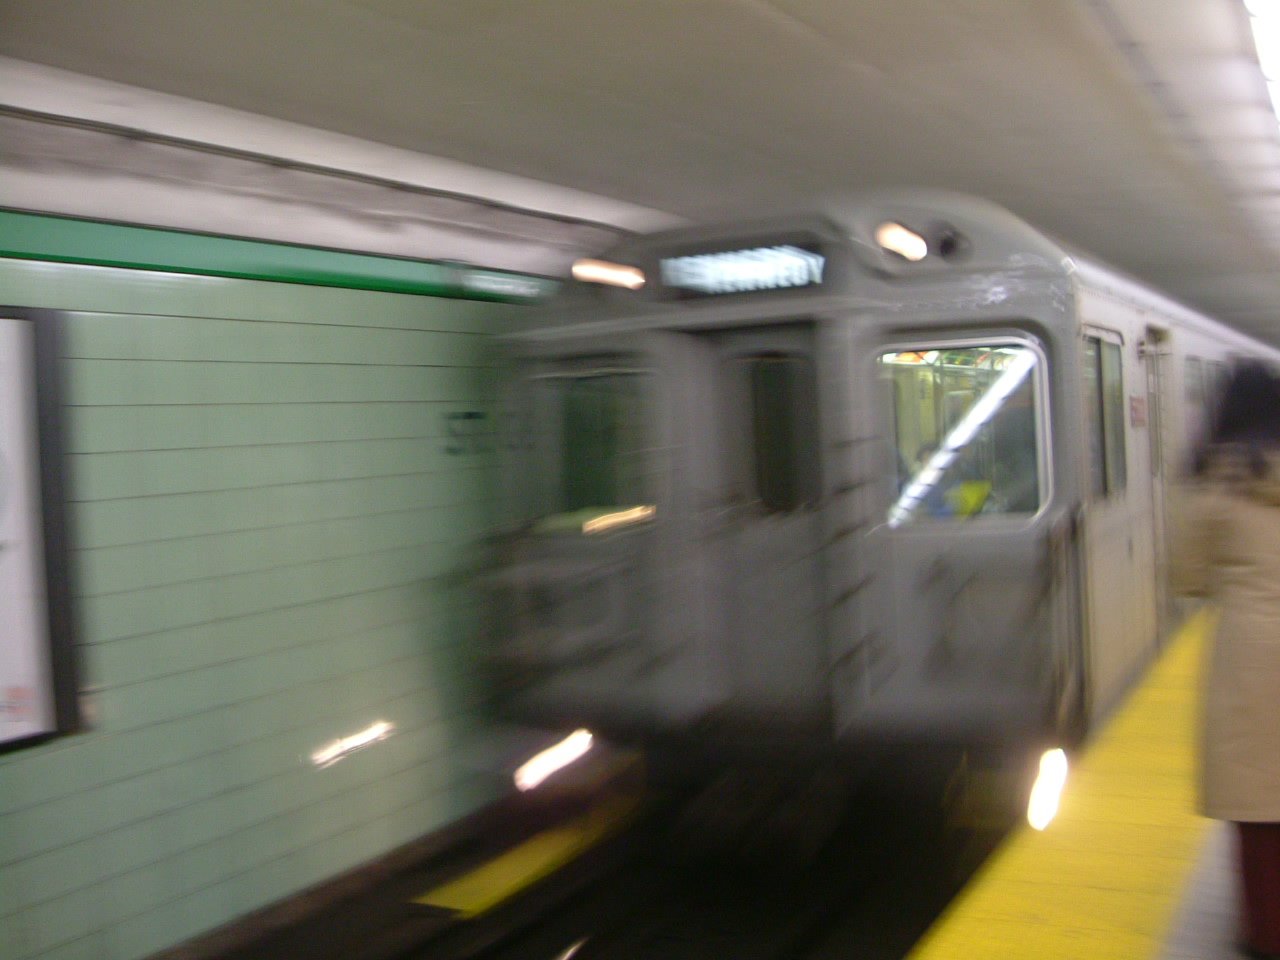 a passenger train is approaching the subway platform